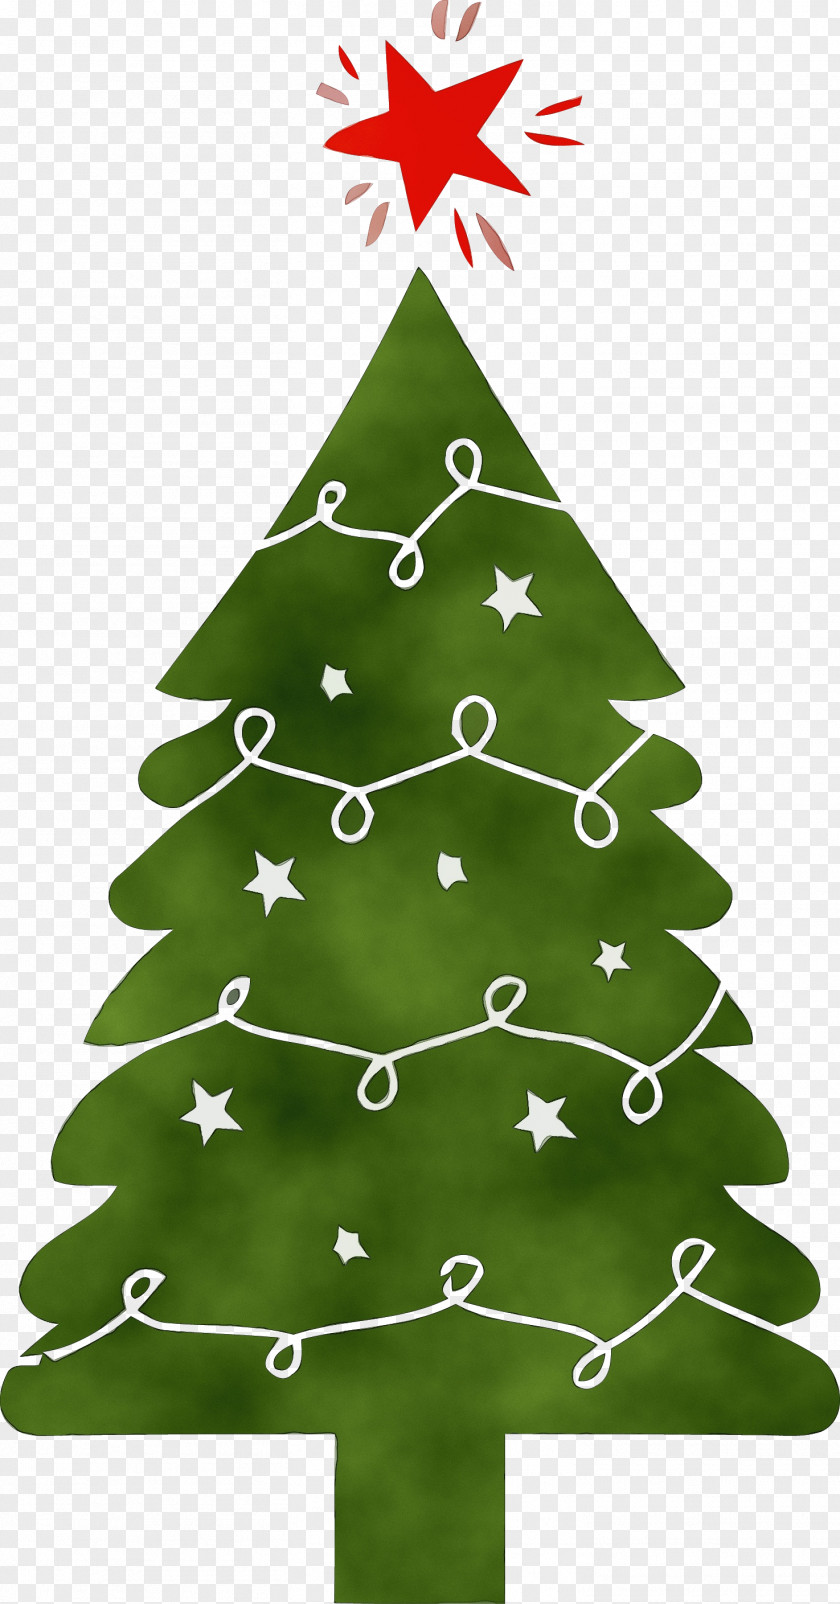 Pine Holiday Ornament Christmas Tree PNG